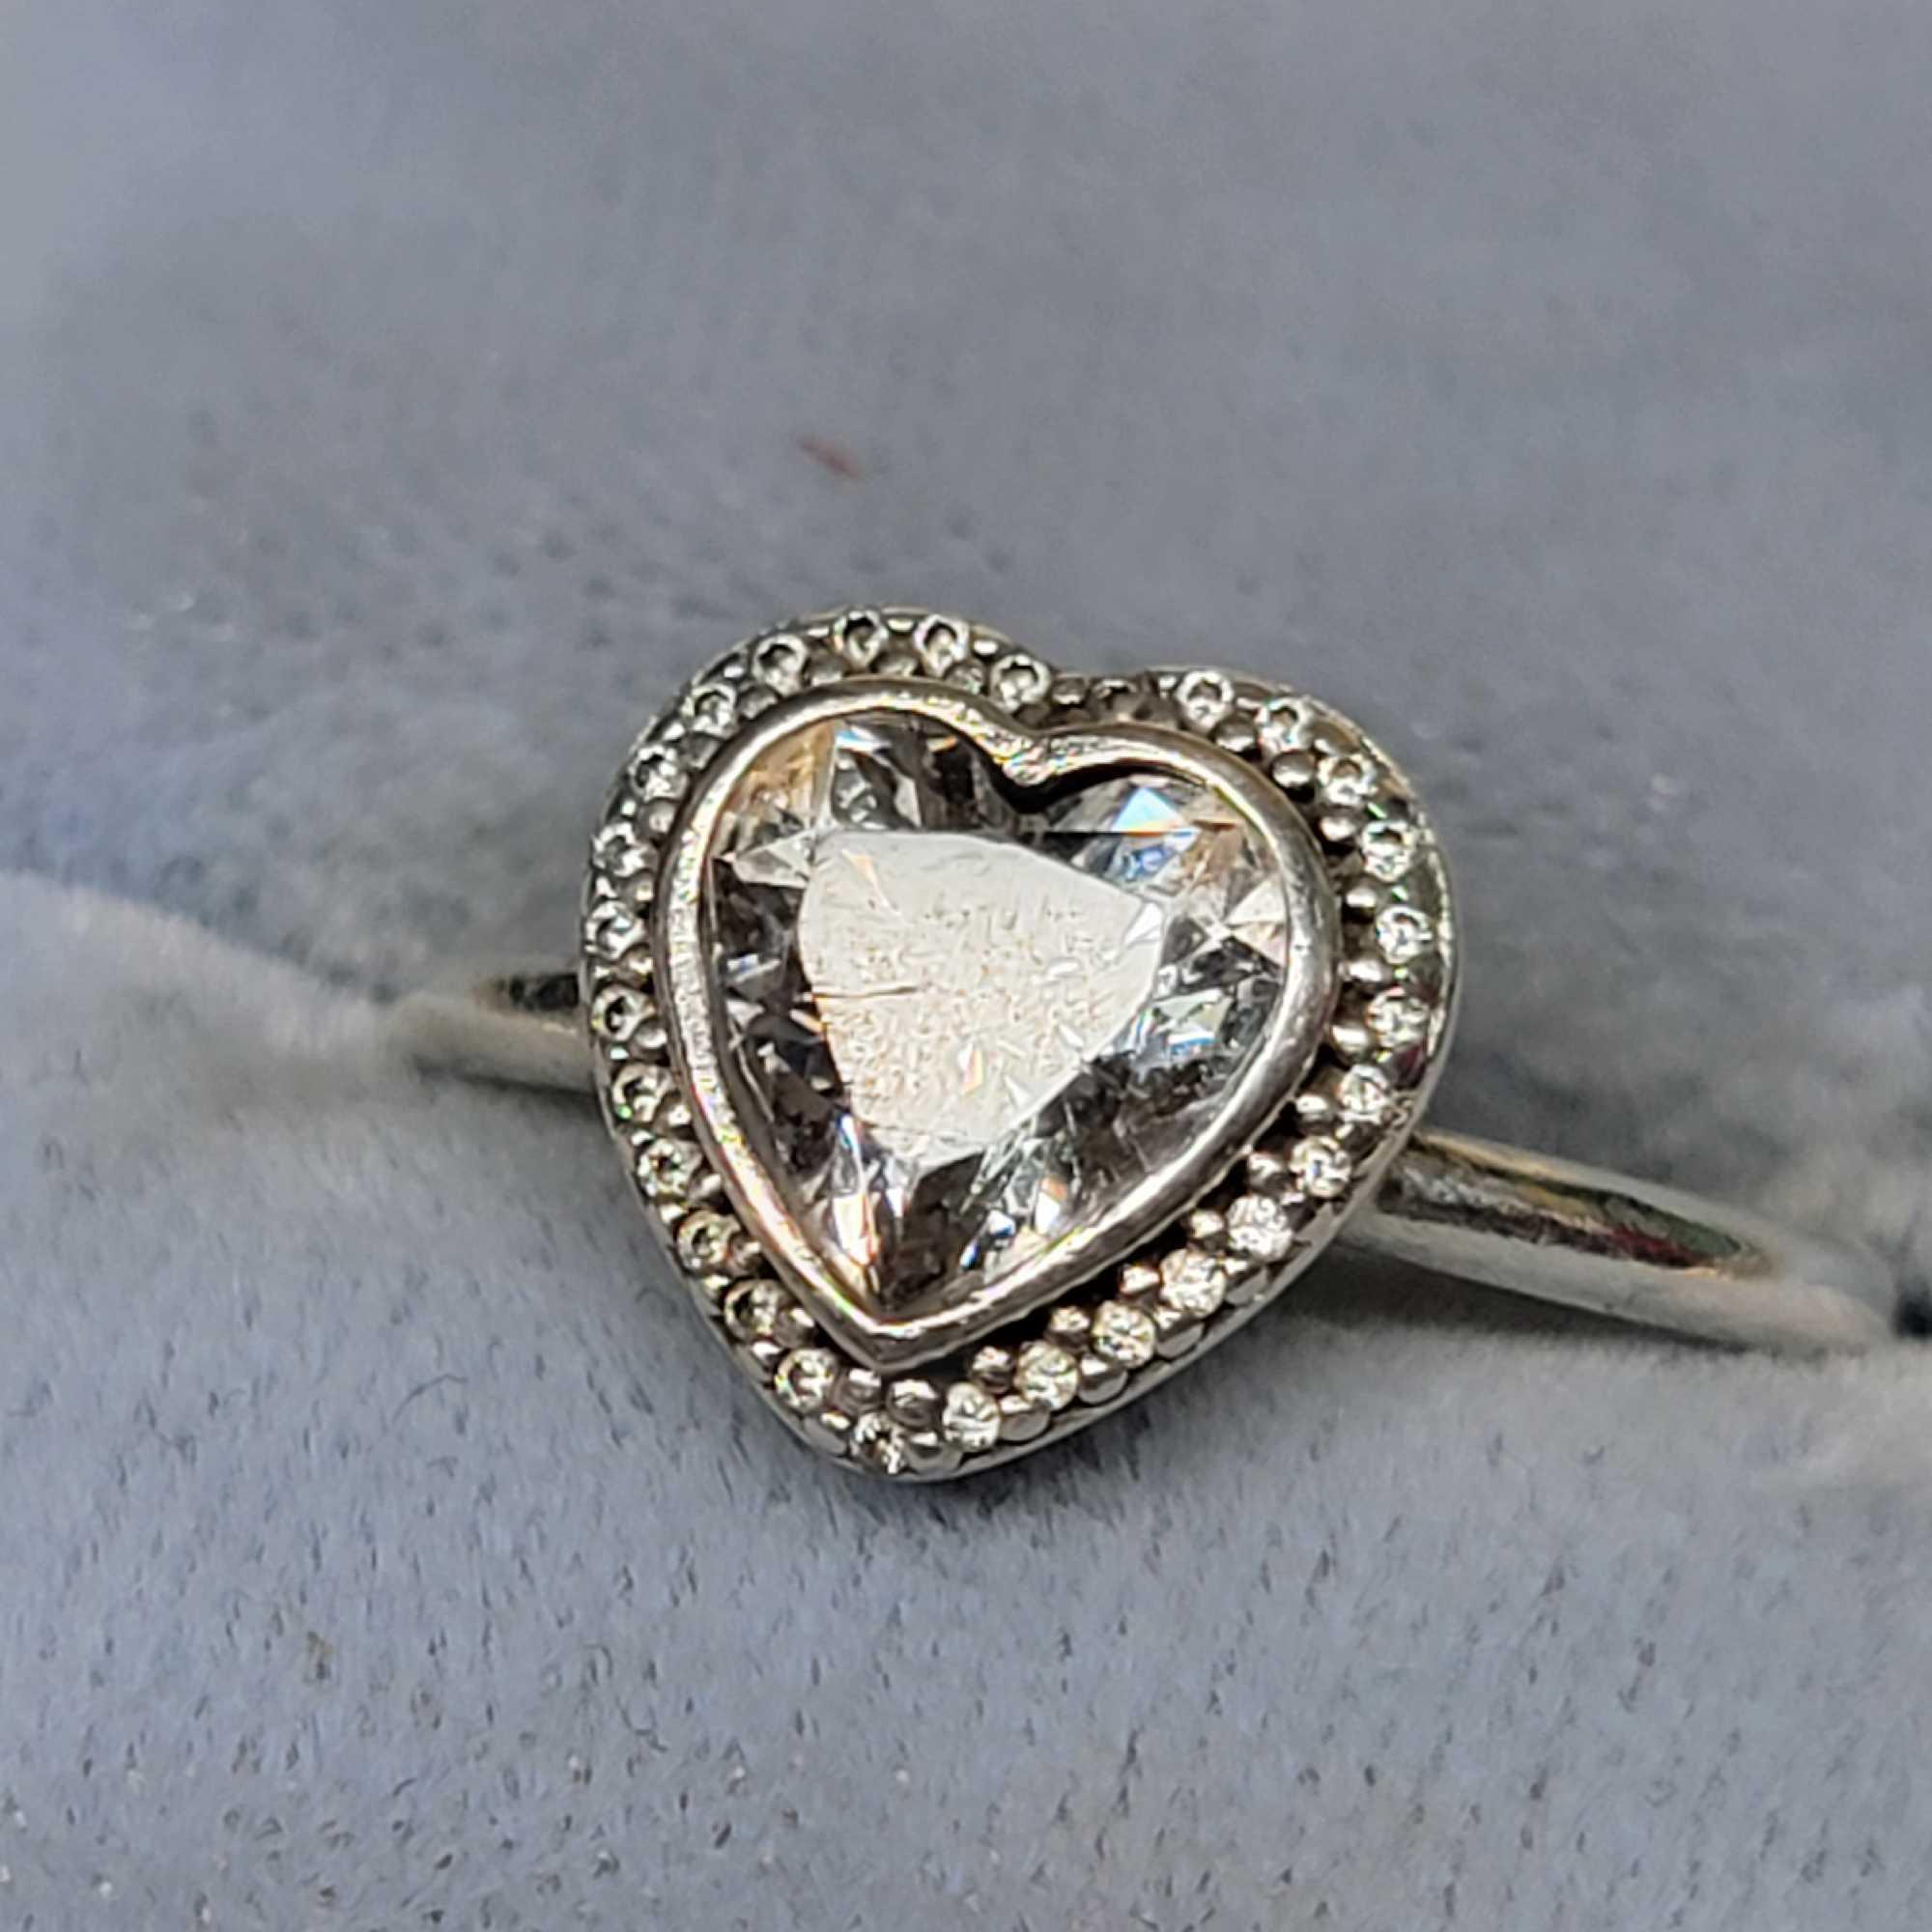 Pandora Jewelry 925 Sterling Ring, Diamond Accents w/ Quartz Heart Gem Stone